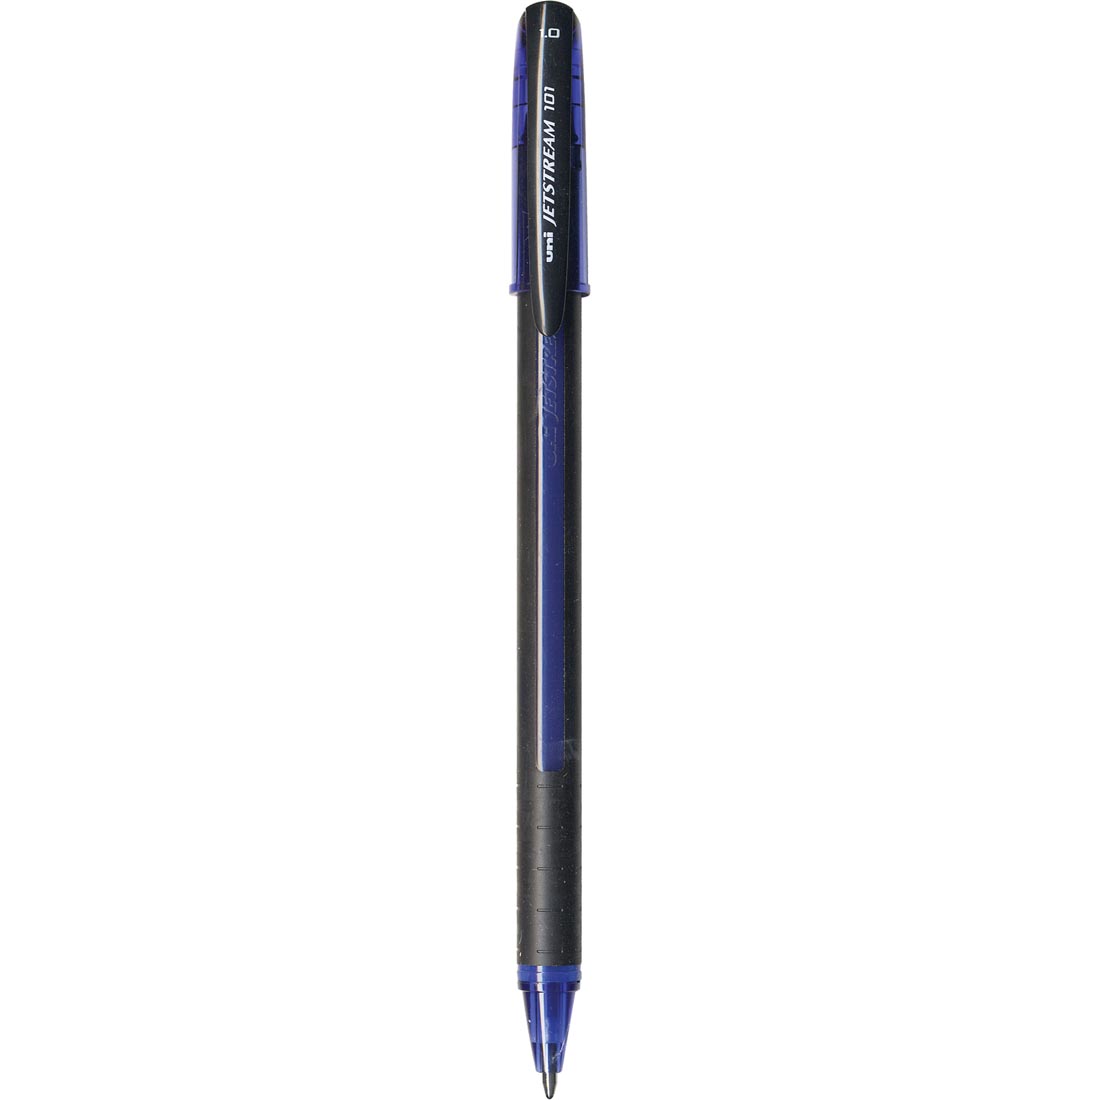 Uni-ball Jetstream 101 Rollerball Pen Blue with cap on opposite end